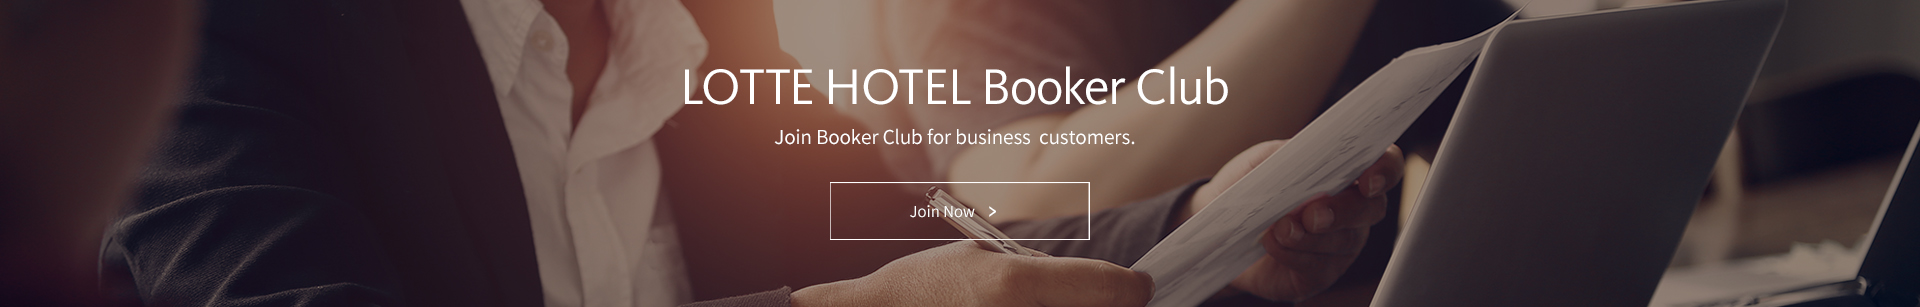 LOTTE HOTEL Booker Club